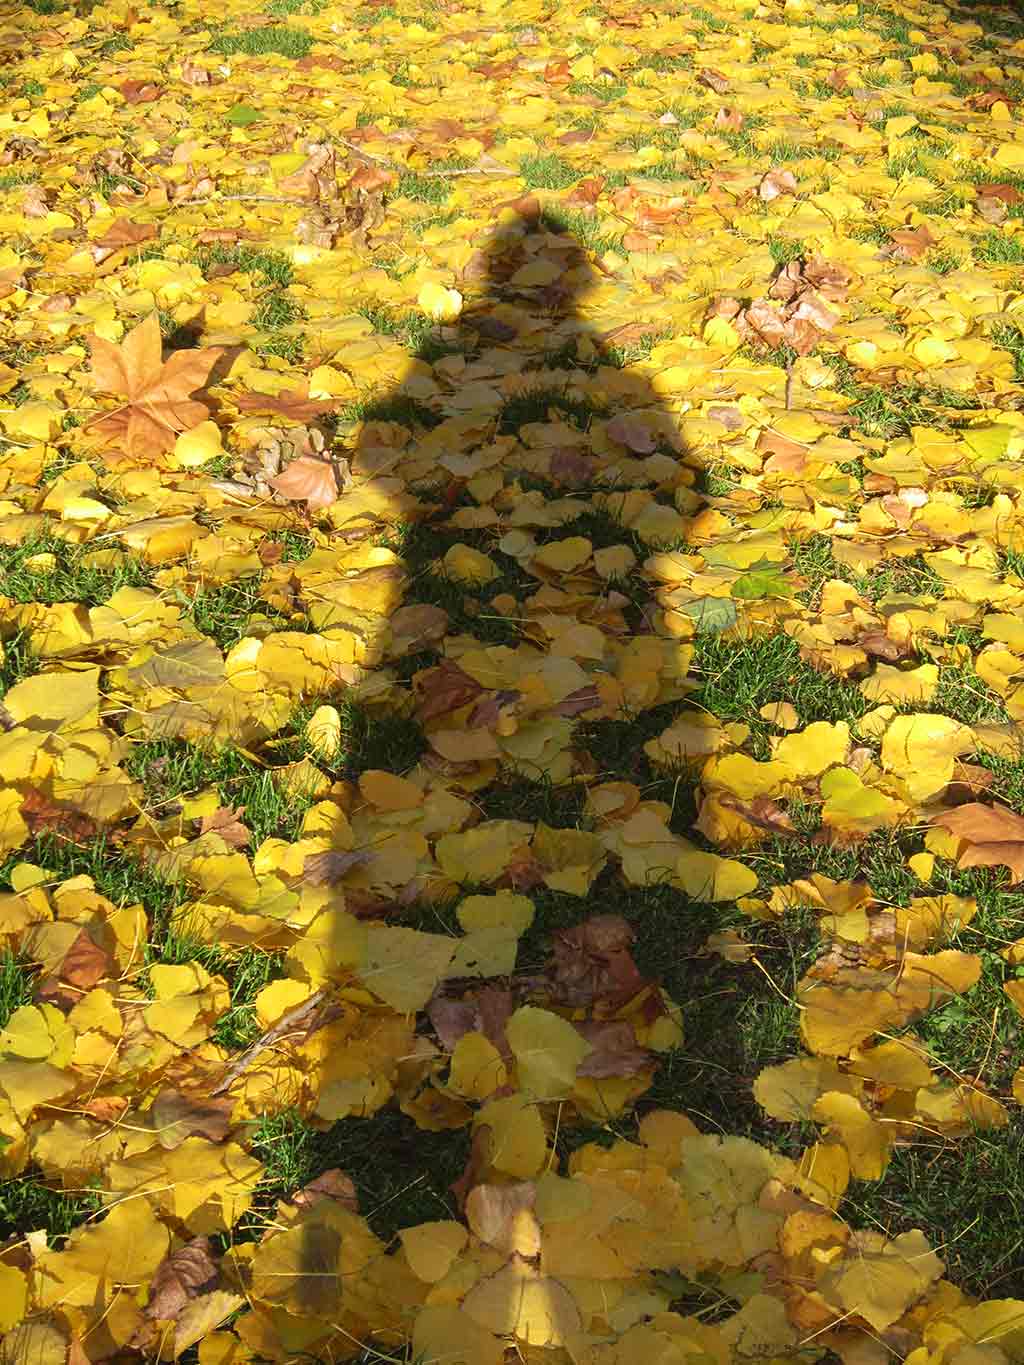 My shadow on fallen leaves; by Wiesław Sadurski